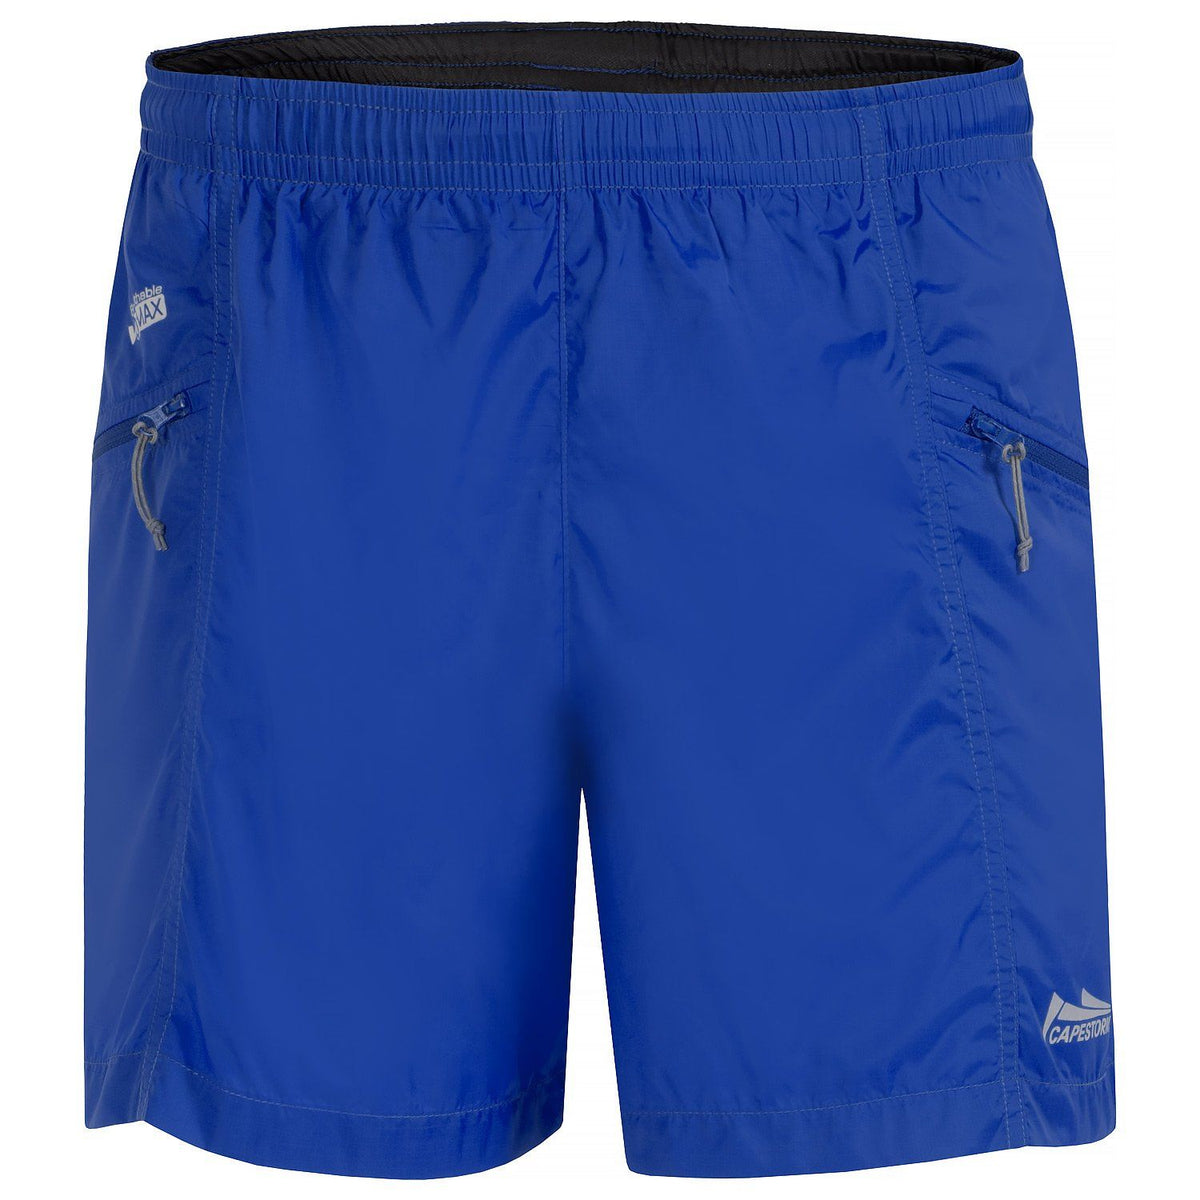 Cape Storm  A3 shorts -Royal blue